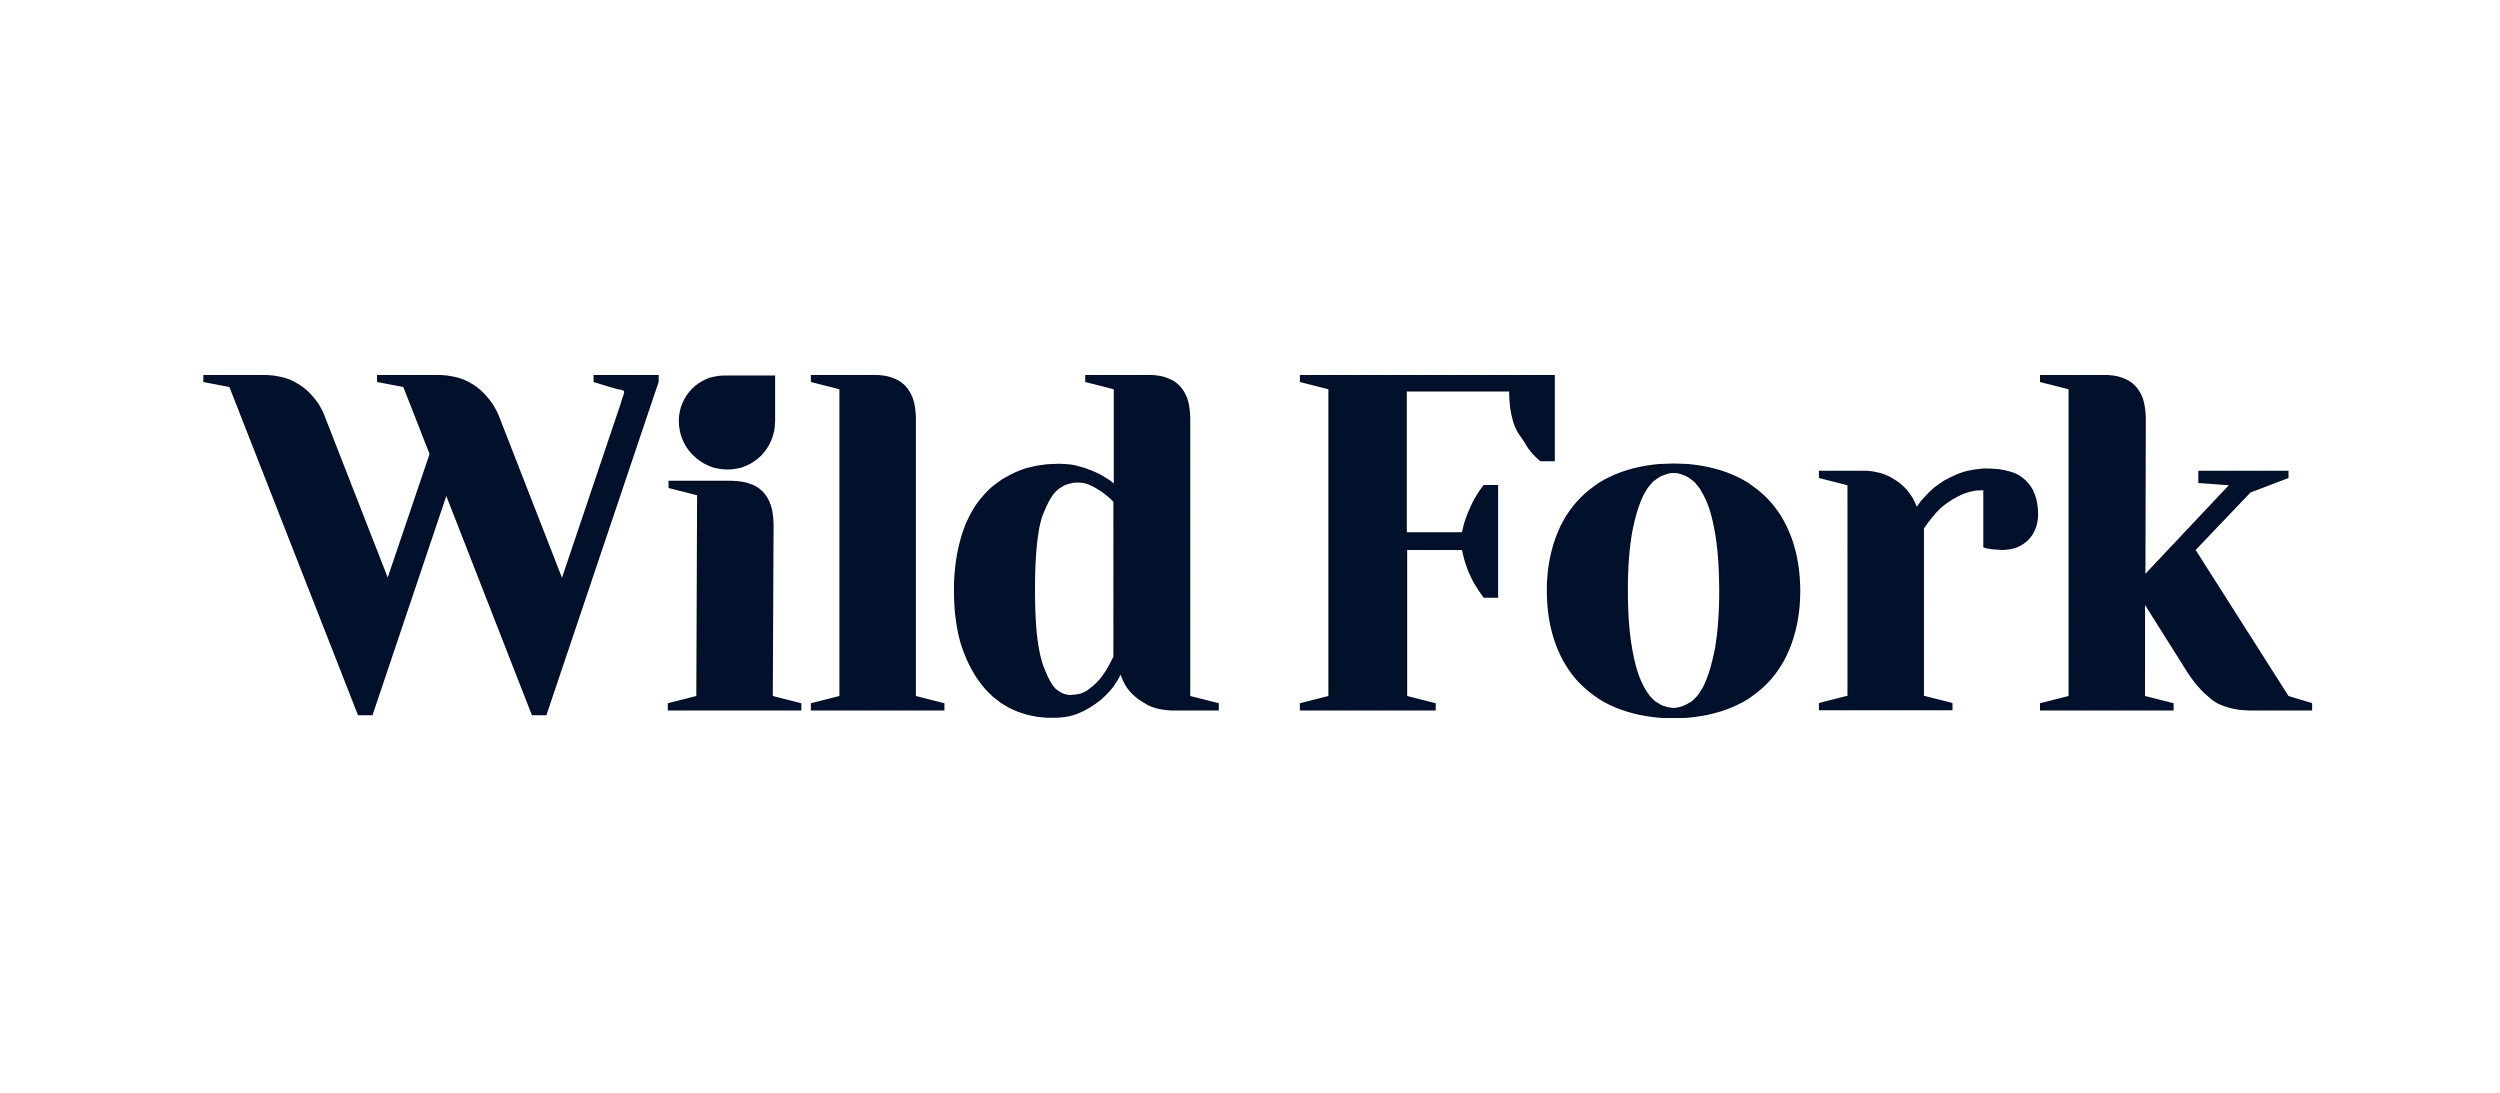 Wild Fork logo